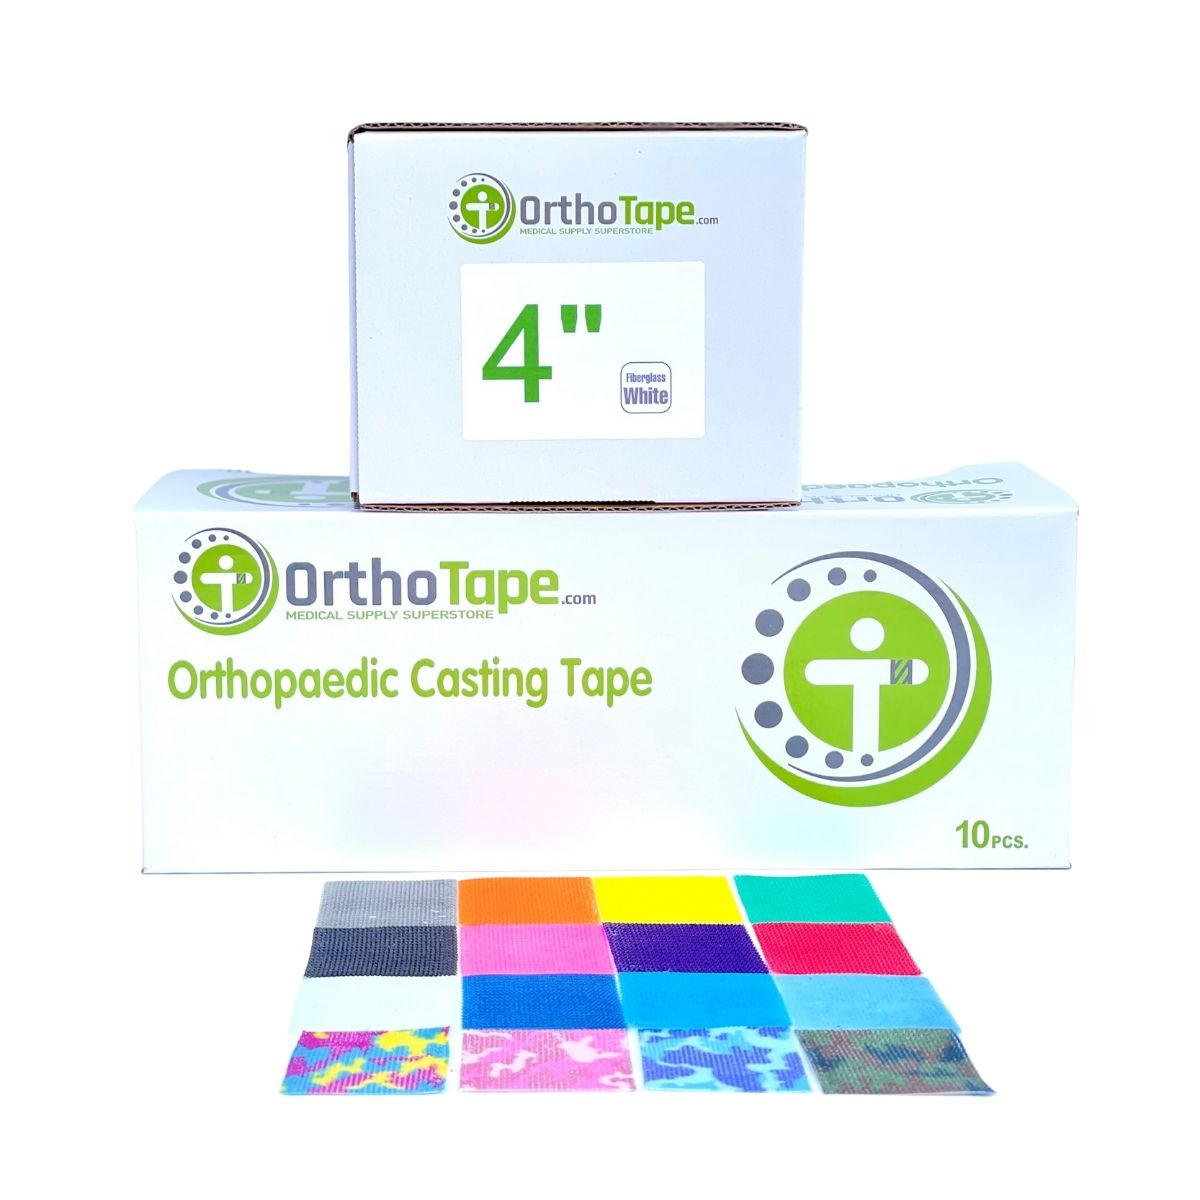 OrthoTape Premium Fiberglass Cast Tape |4 INCH - 10 ROLL BOX|